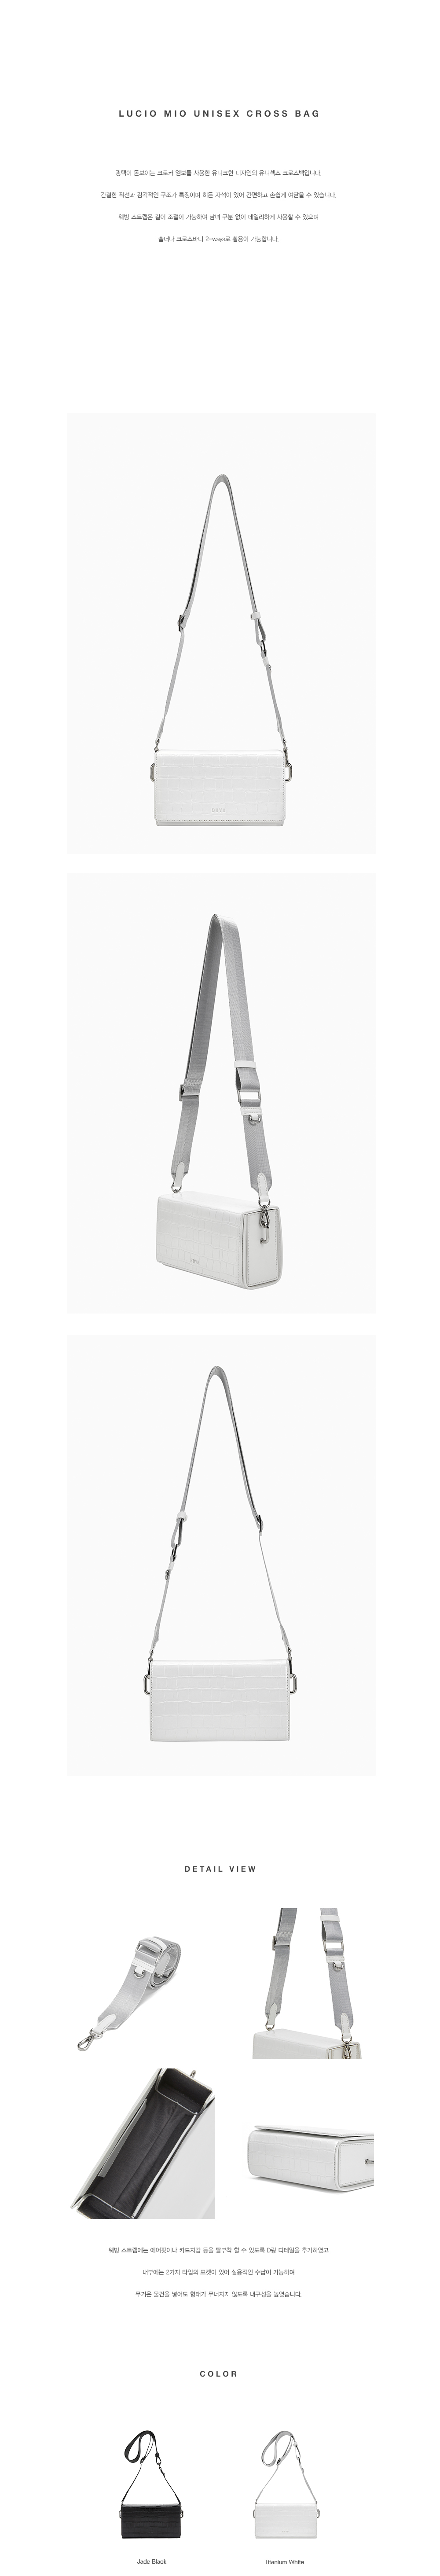 BBYB Mio Unisex Cross Bag (Titanium White)